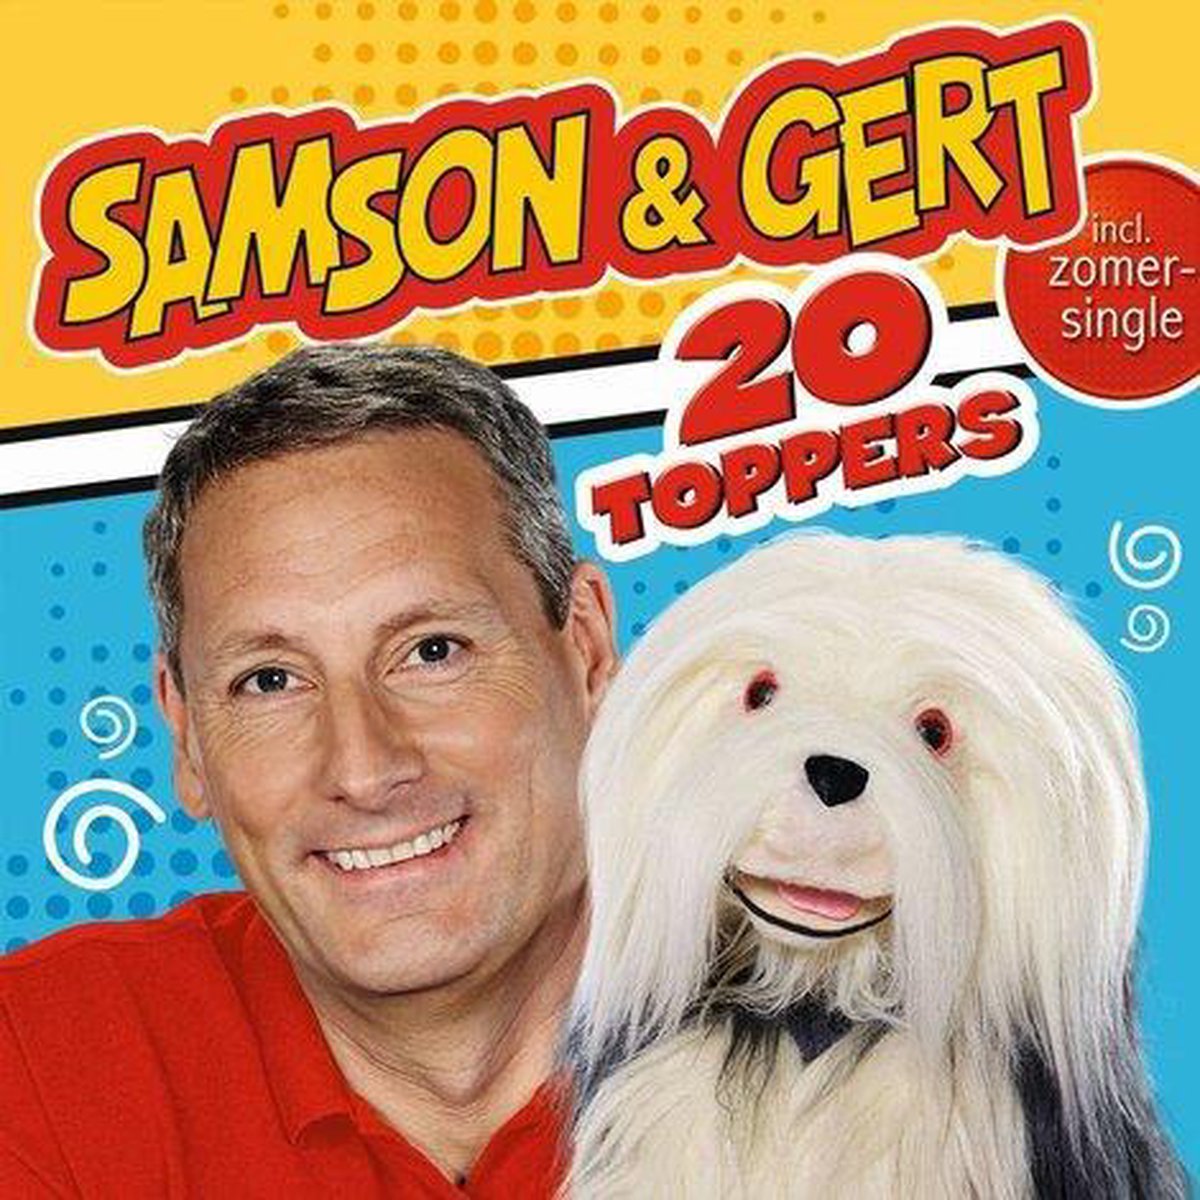 20 Toppers - Samson & Gert